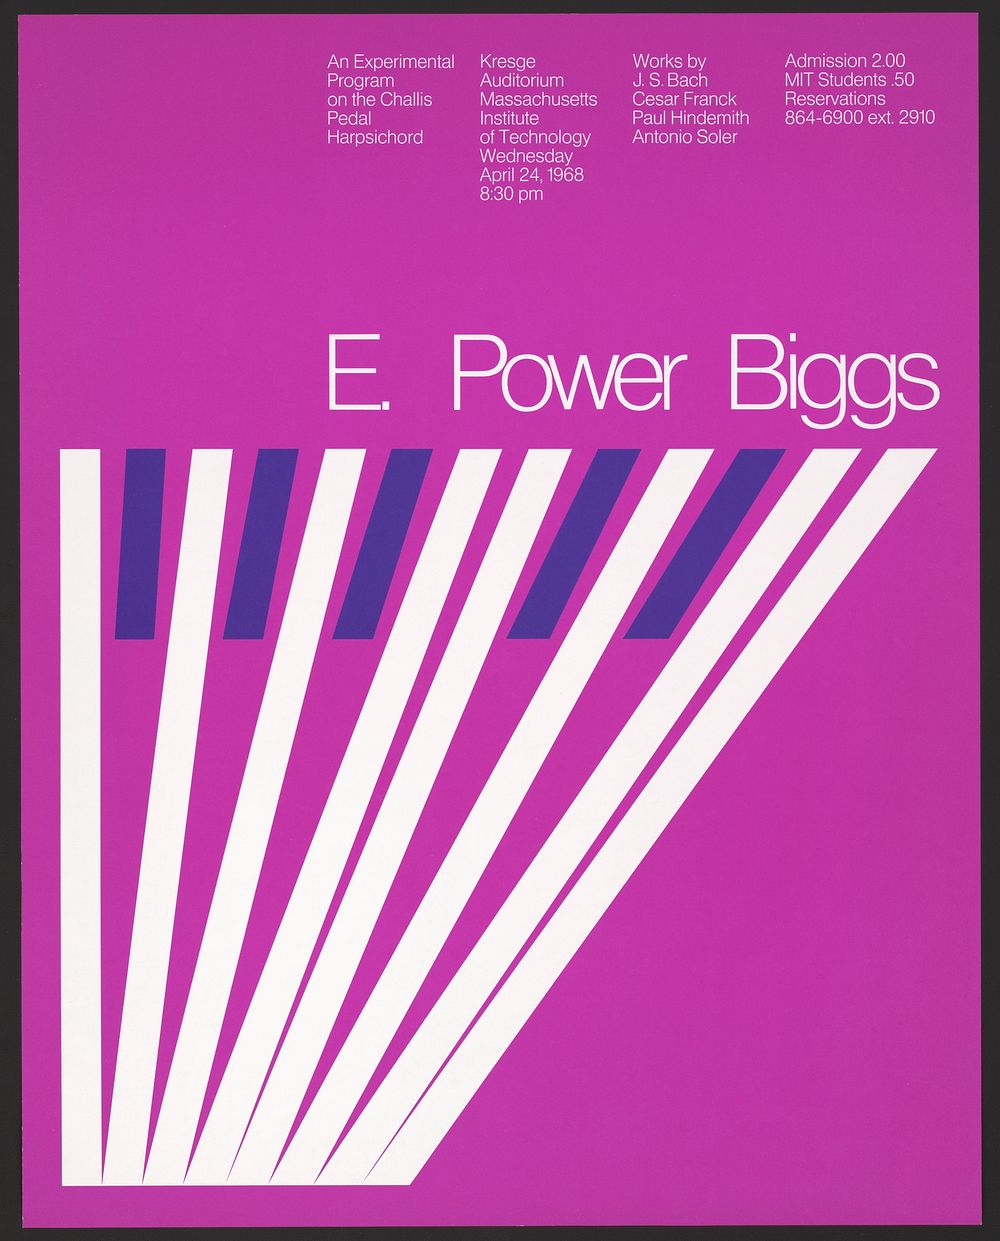 E. Power Biggs, an experimental program on the Challis pedal harpsichord